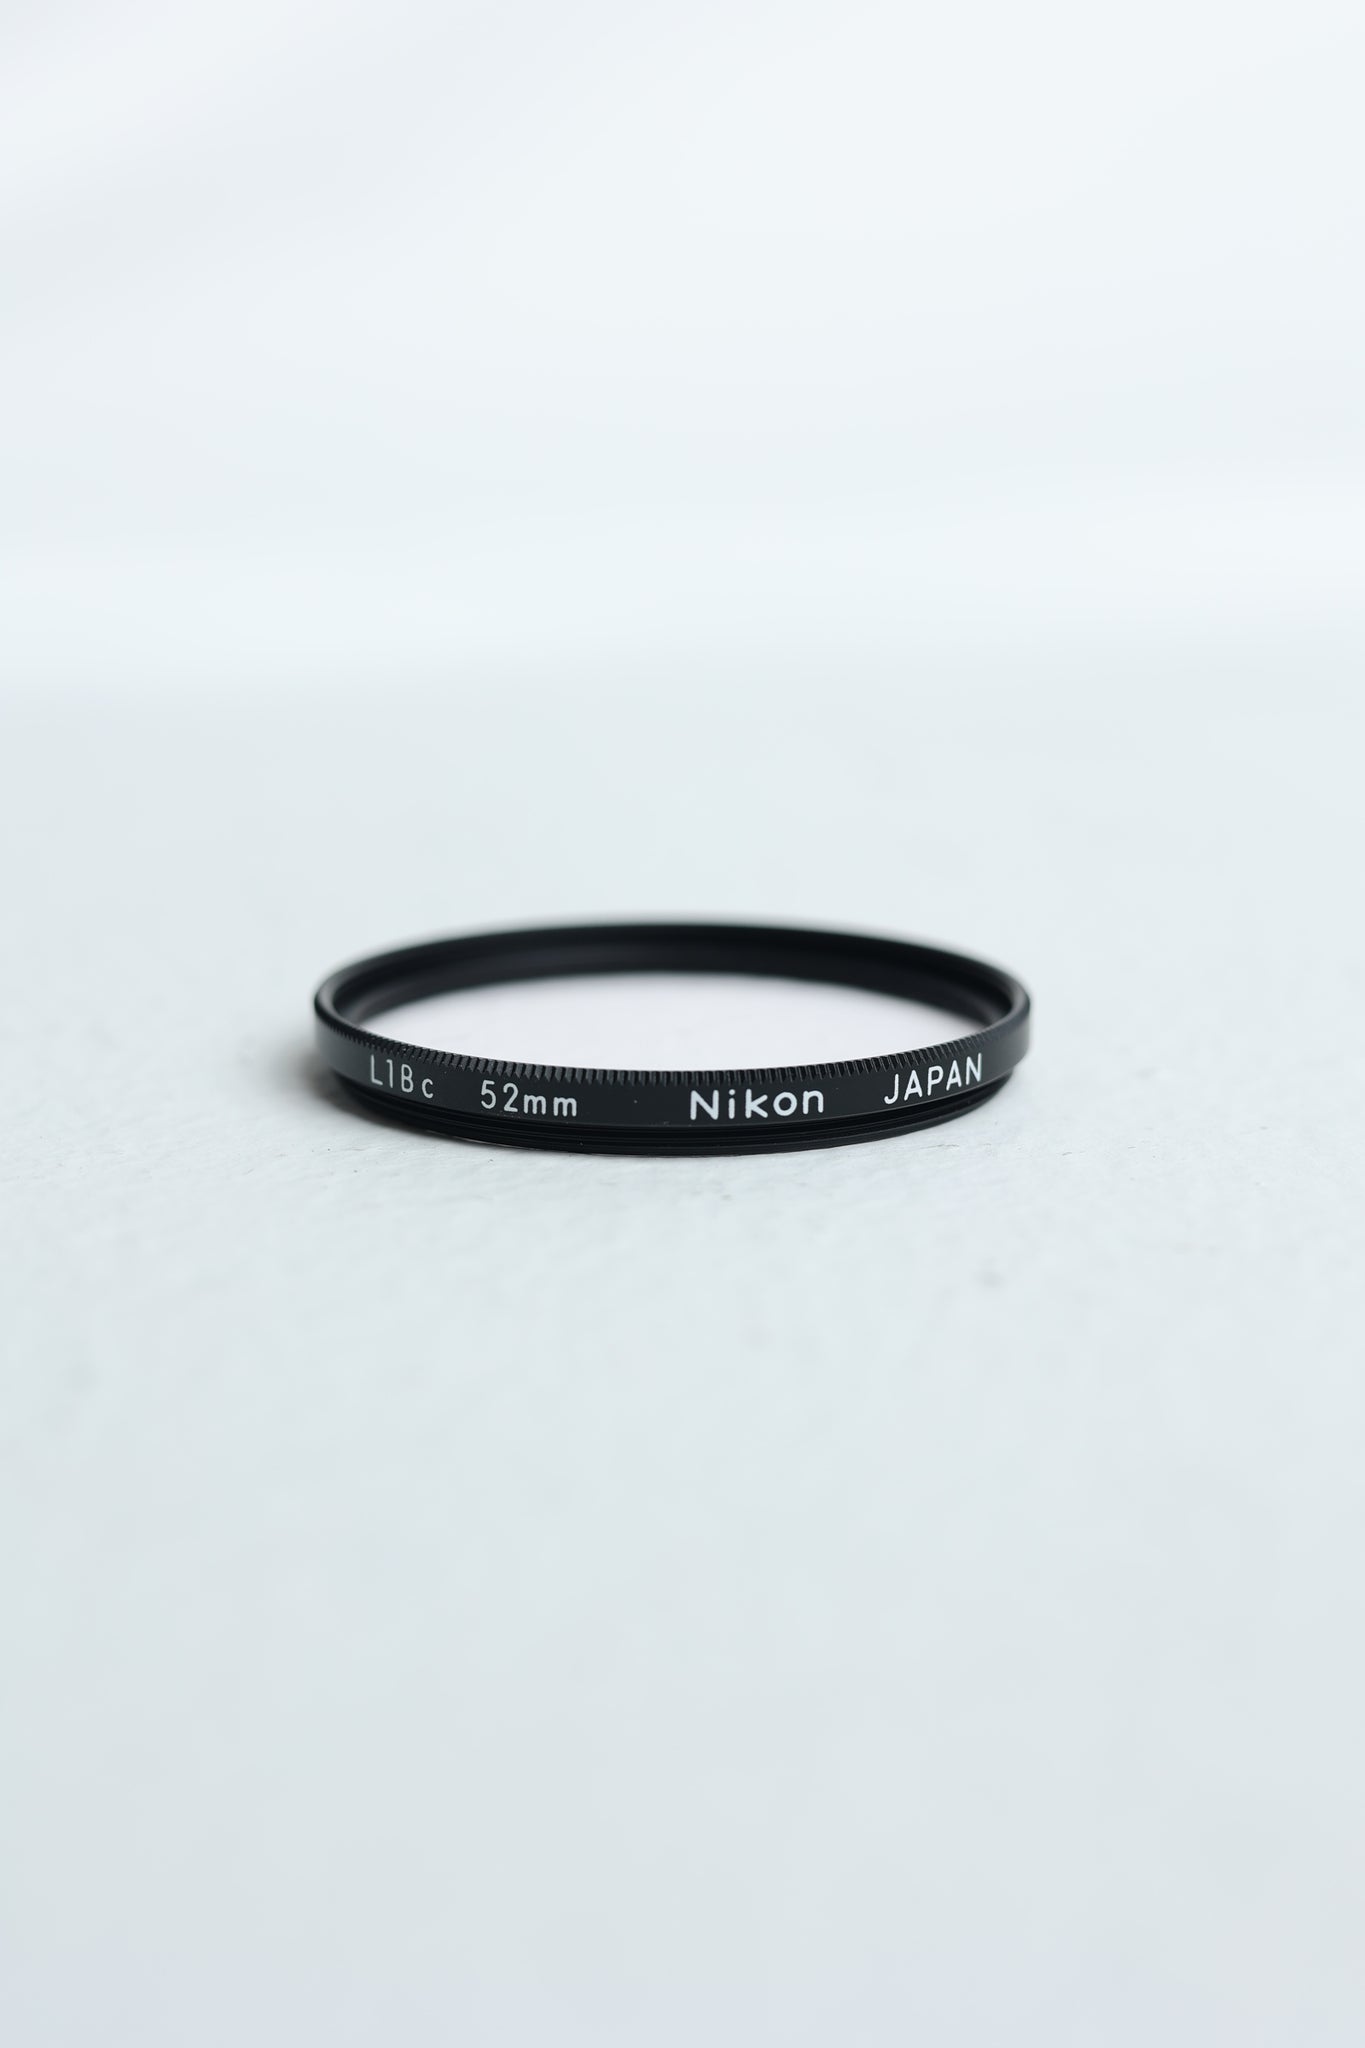 Nikon 52mm L1BC Filter, Used